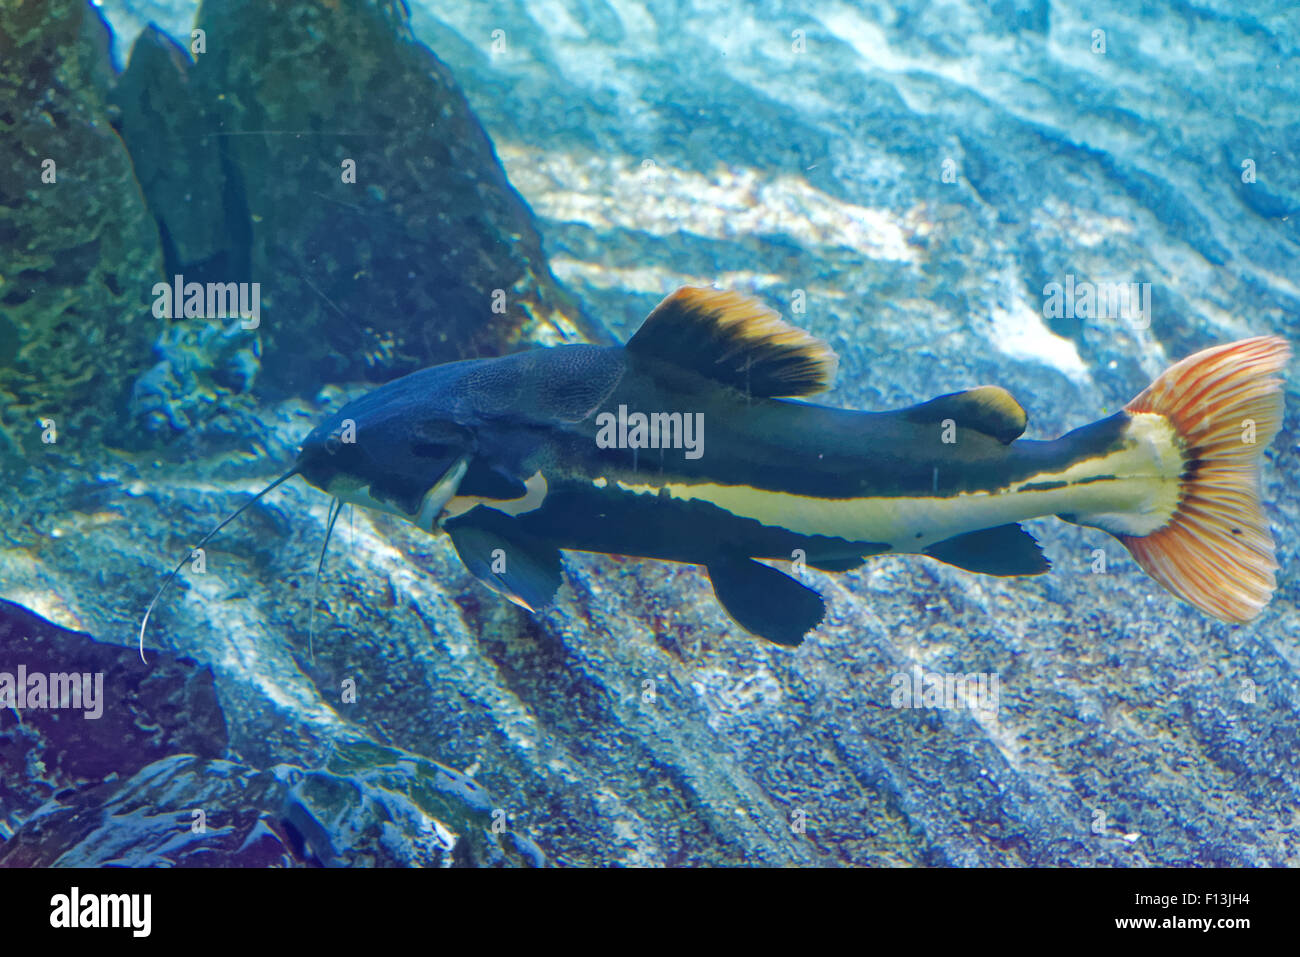 Redtail catfish, Phractocephalus hemioliopterus, is a pimelodid (long-whiskered) catfish. Stock Photo